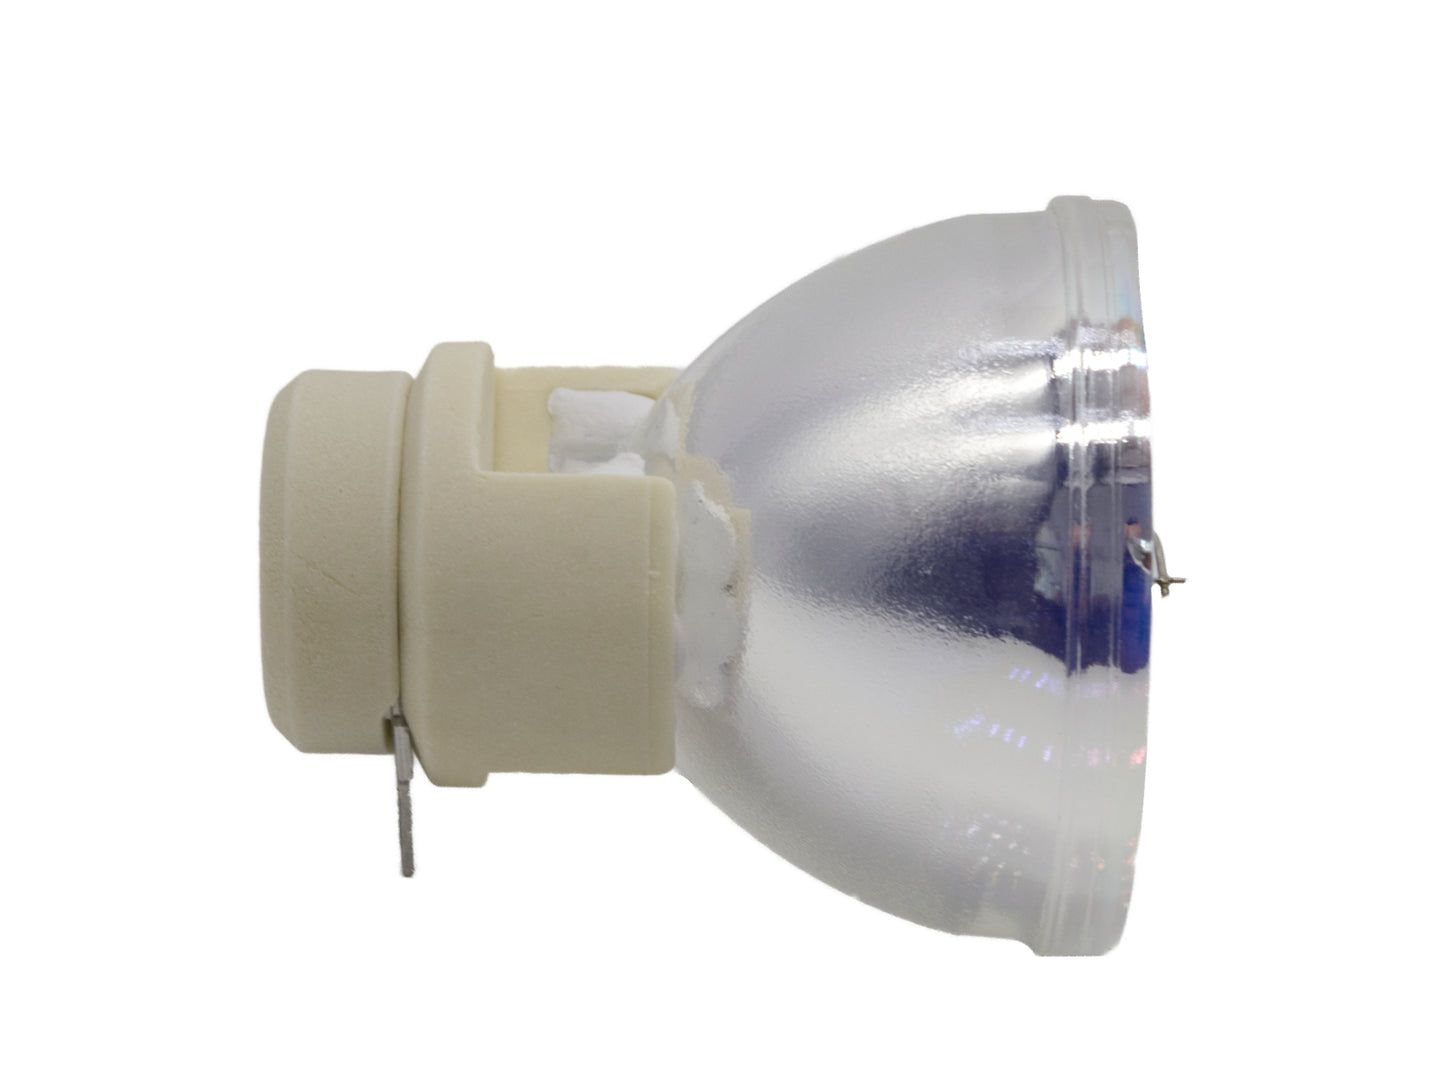 azurano Beamerlampe für ACER MC.JN811.001 Ersatzlampe Projektorlampe - Bild 5